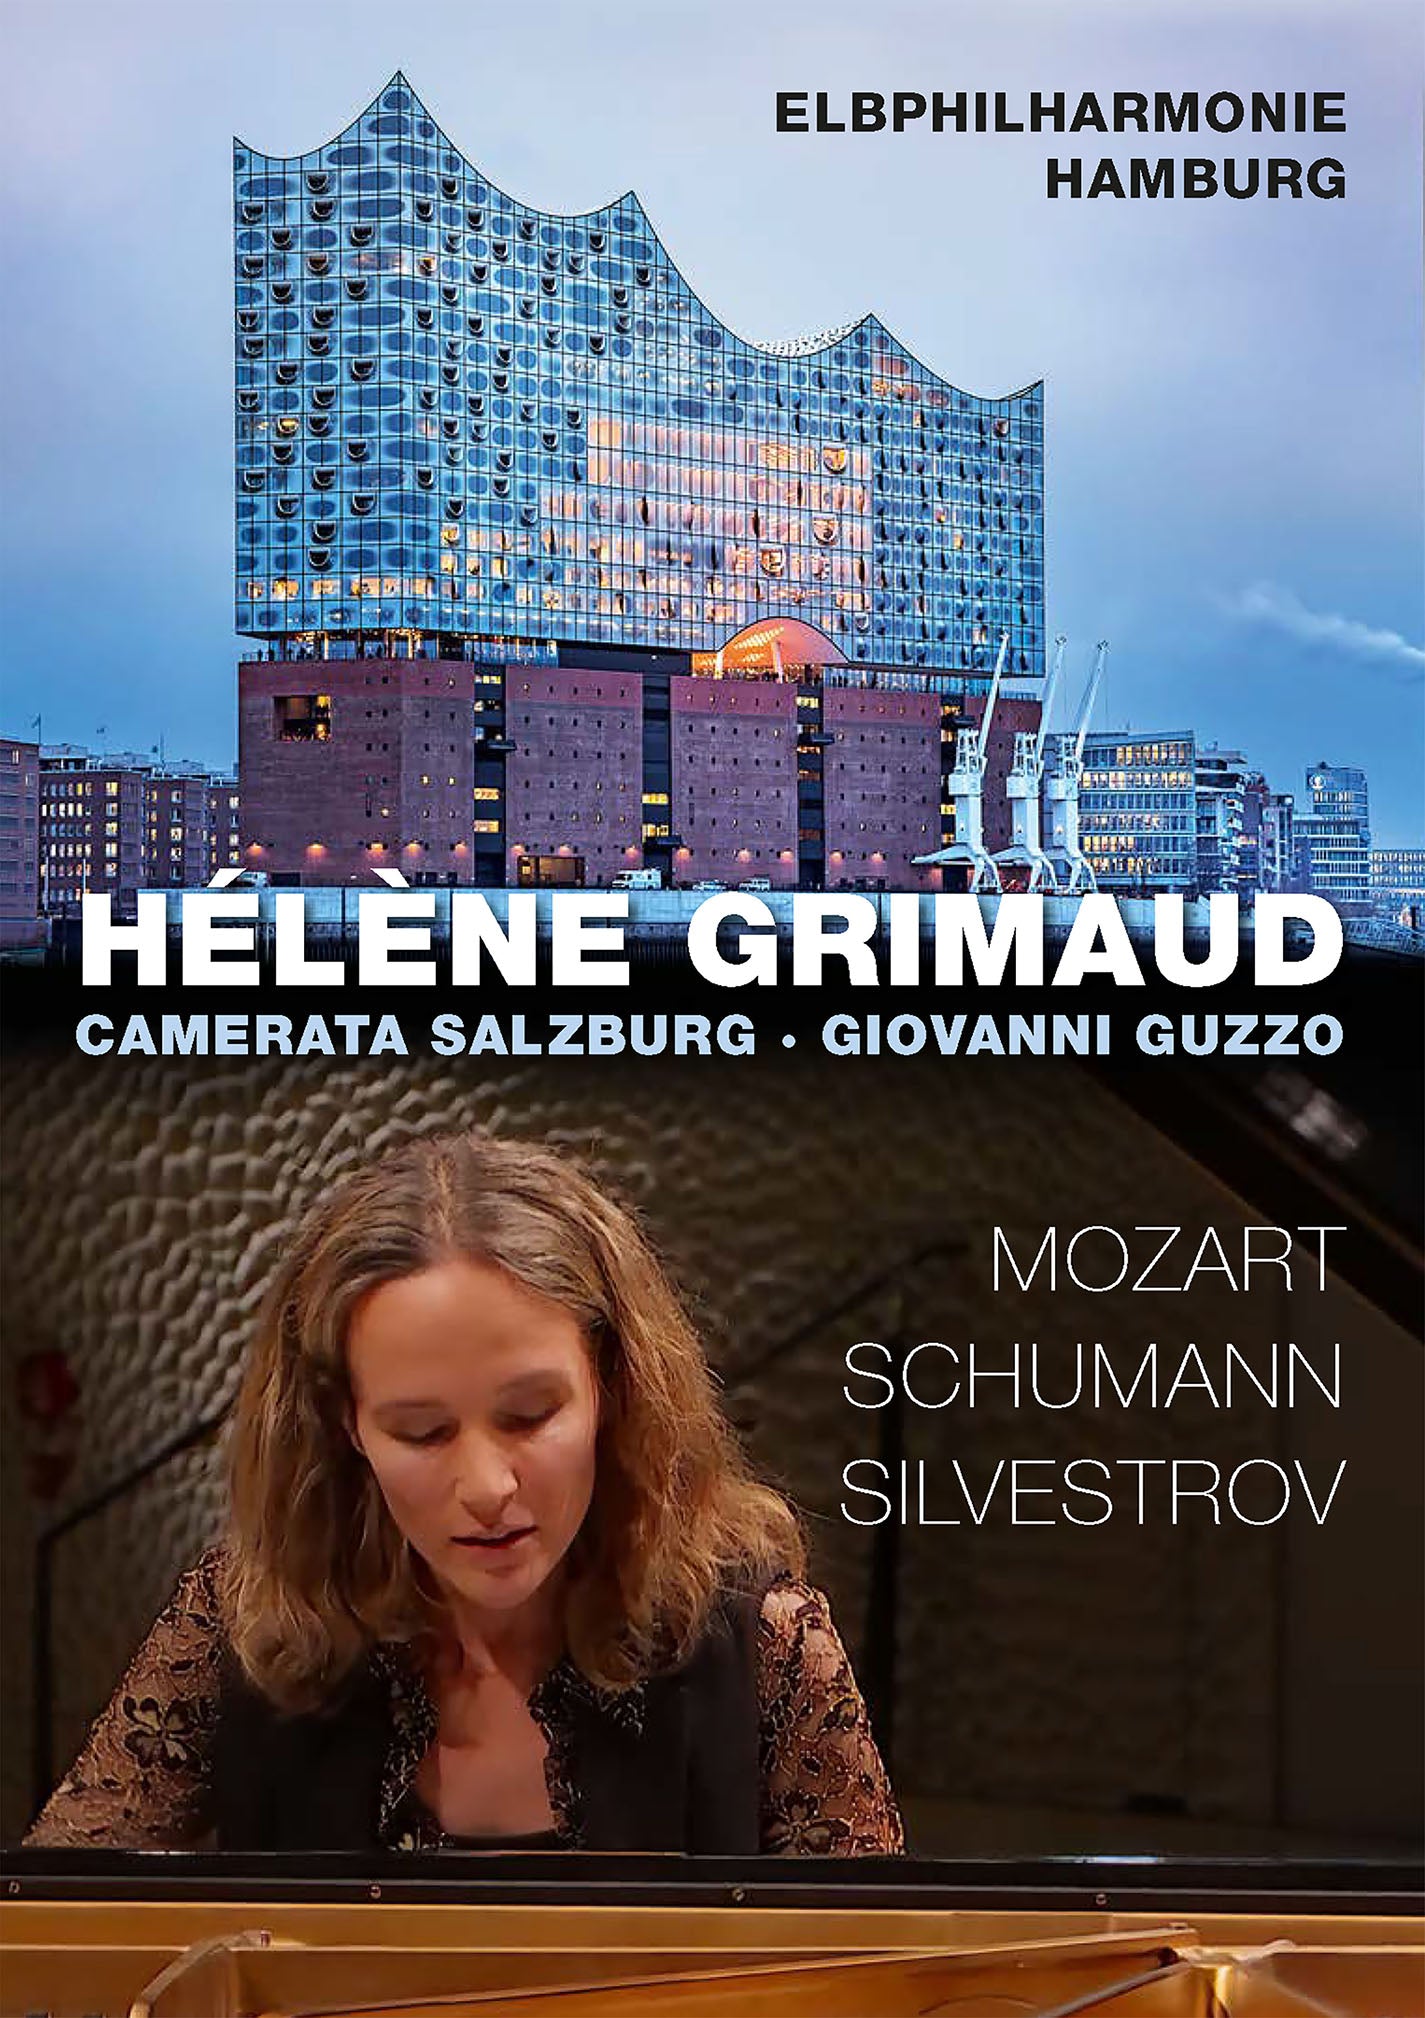 Hélène Grimaud at the Hamburg Elbphilharmonie